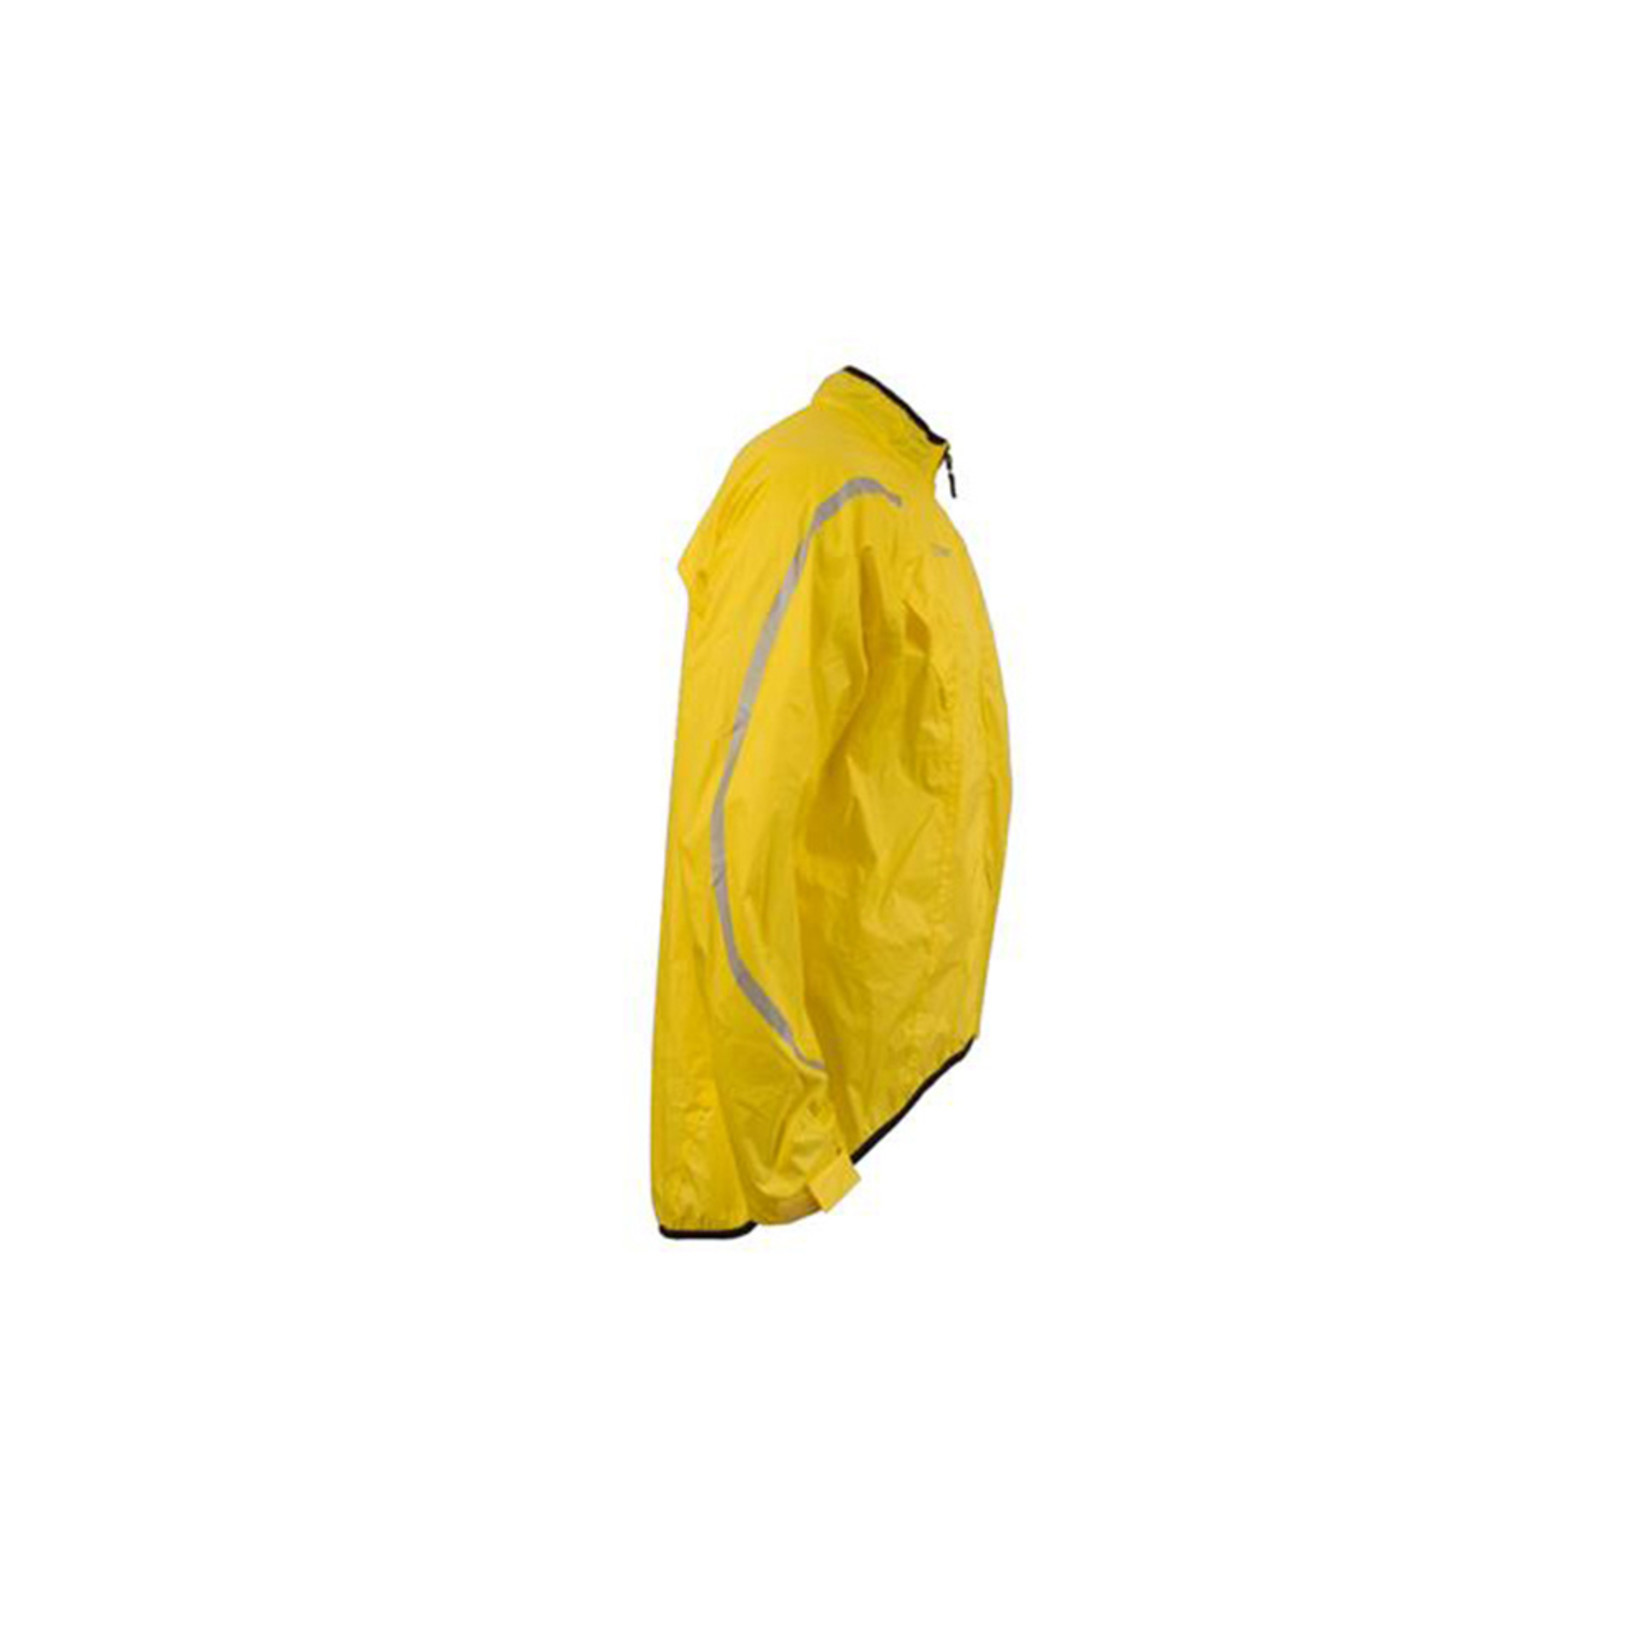 Azur Azur Chaser Jacket - Reflective Waterproof - Fluro Yellow - Medium